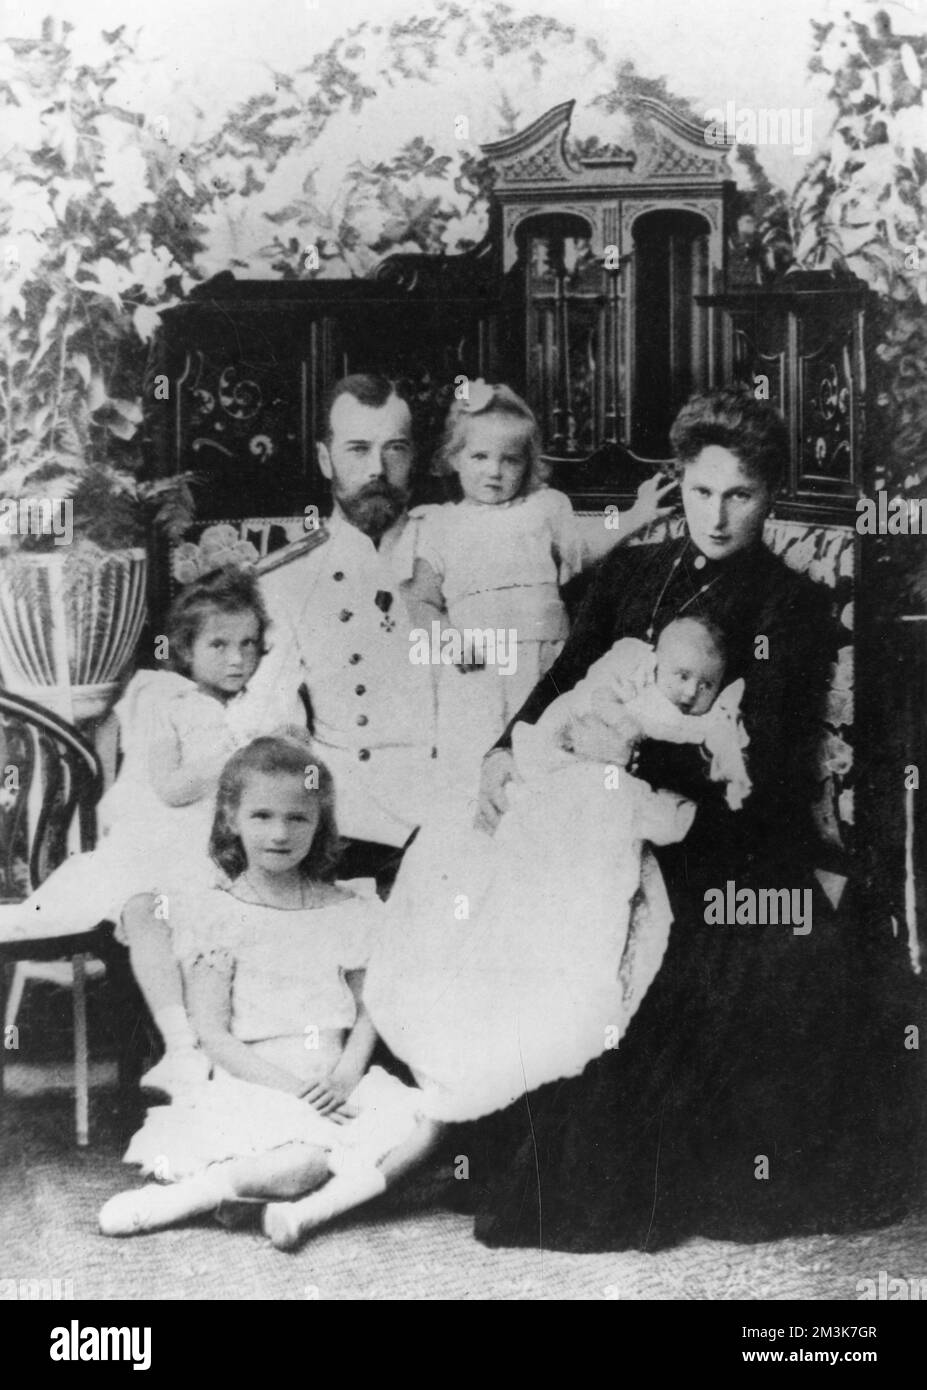 Tsar Nicholas II (1868 - 1918) et son épouse, Tsaritsa Alexandra Feodorovna, ex-princesse Alix de Hesse-Darmstadt (1872-1918) et leurs quatre enfants les plus âgés, les Grand Princesses Olga, Tatiana, Marie et Anastasia. Date : circe 1901 Banque D'Images